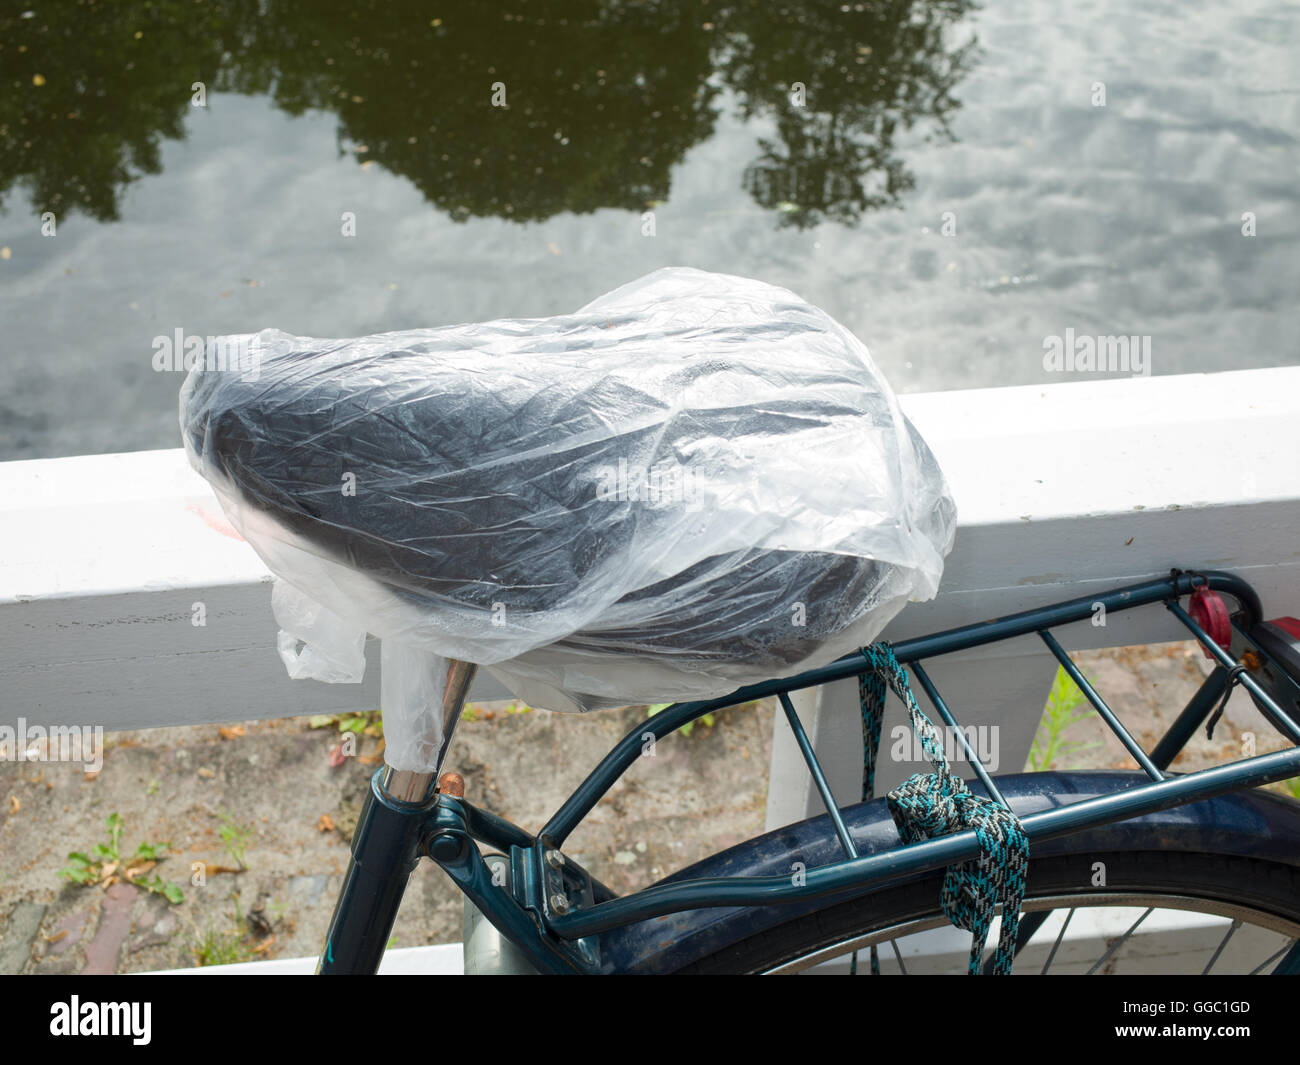 Plastic bag to keep bicycle saddle dry Stock Photo